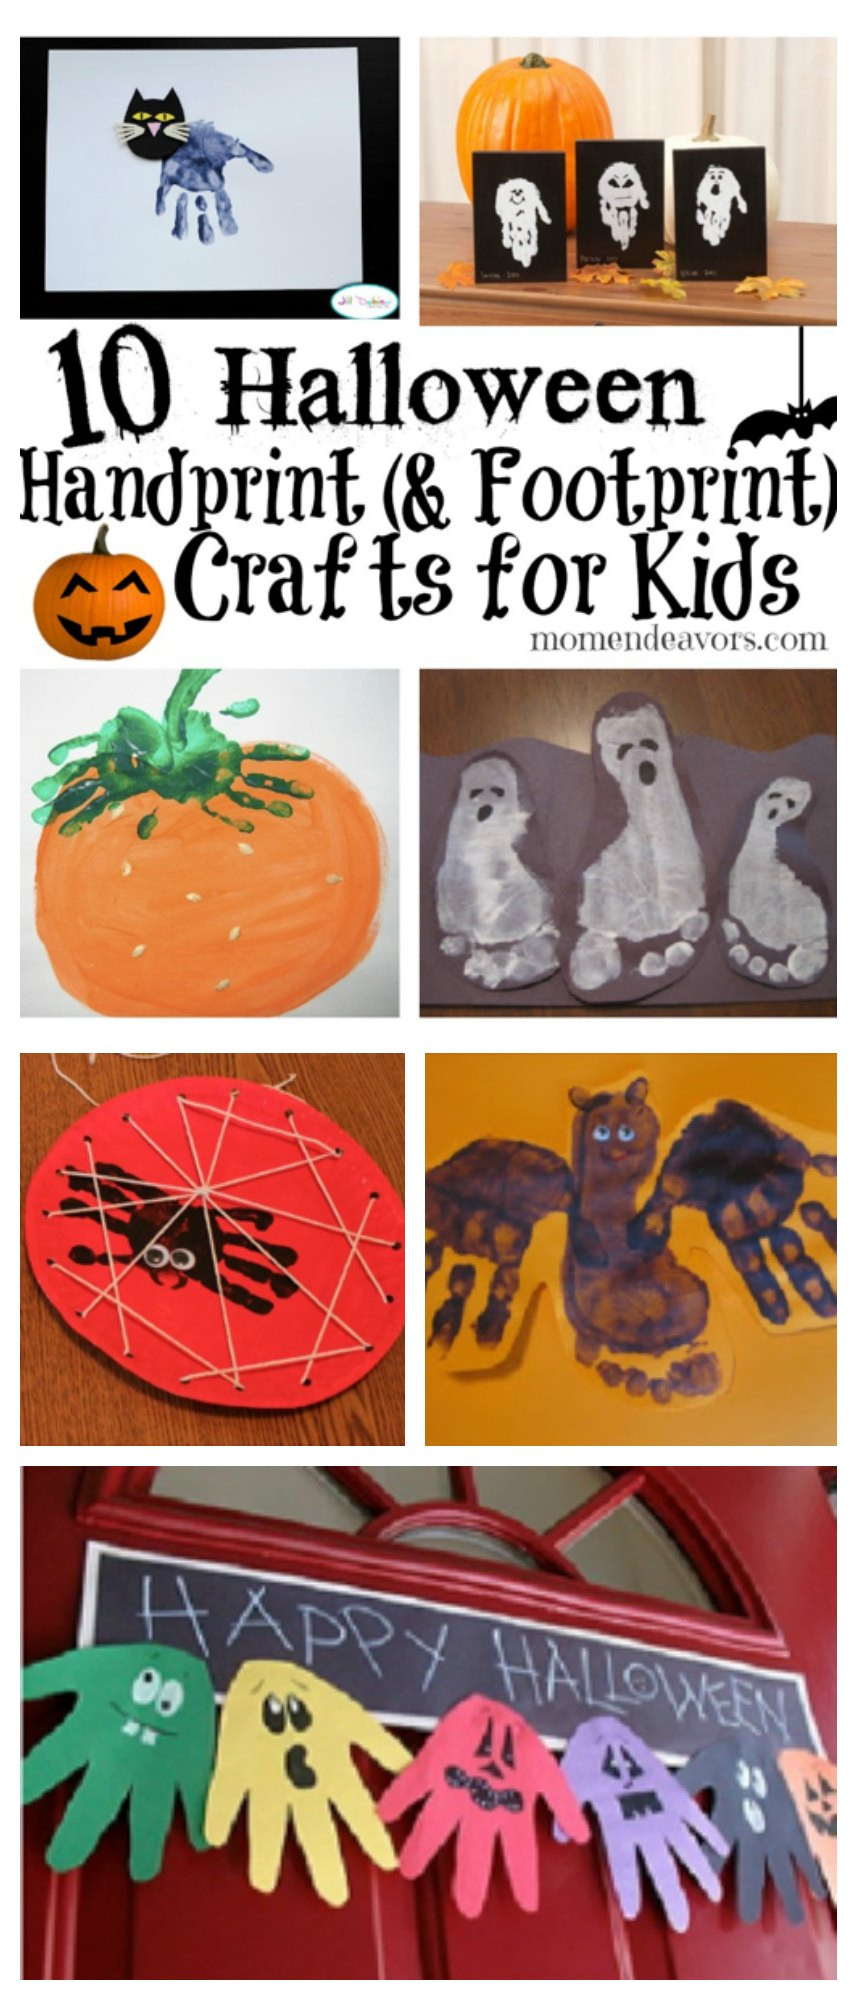 Halloween Handprint Crafts
 10 Halloween Handprint Crafts for Kids Roundup